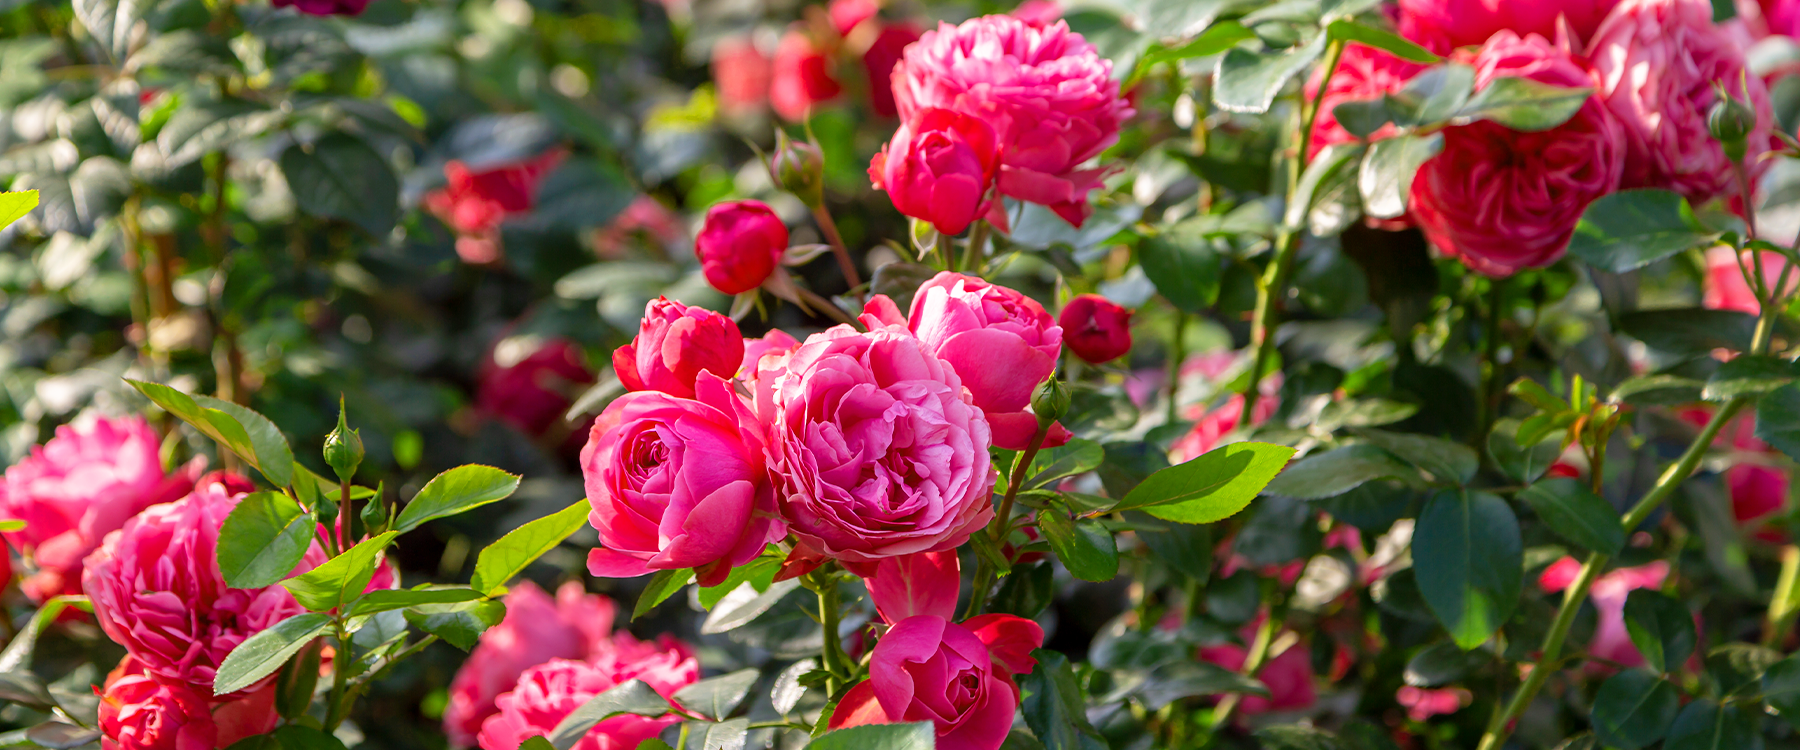 How to Grow Beautiful Roses - Easily!